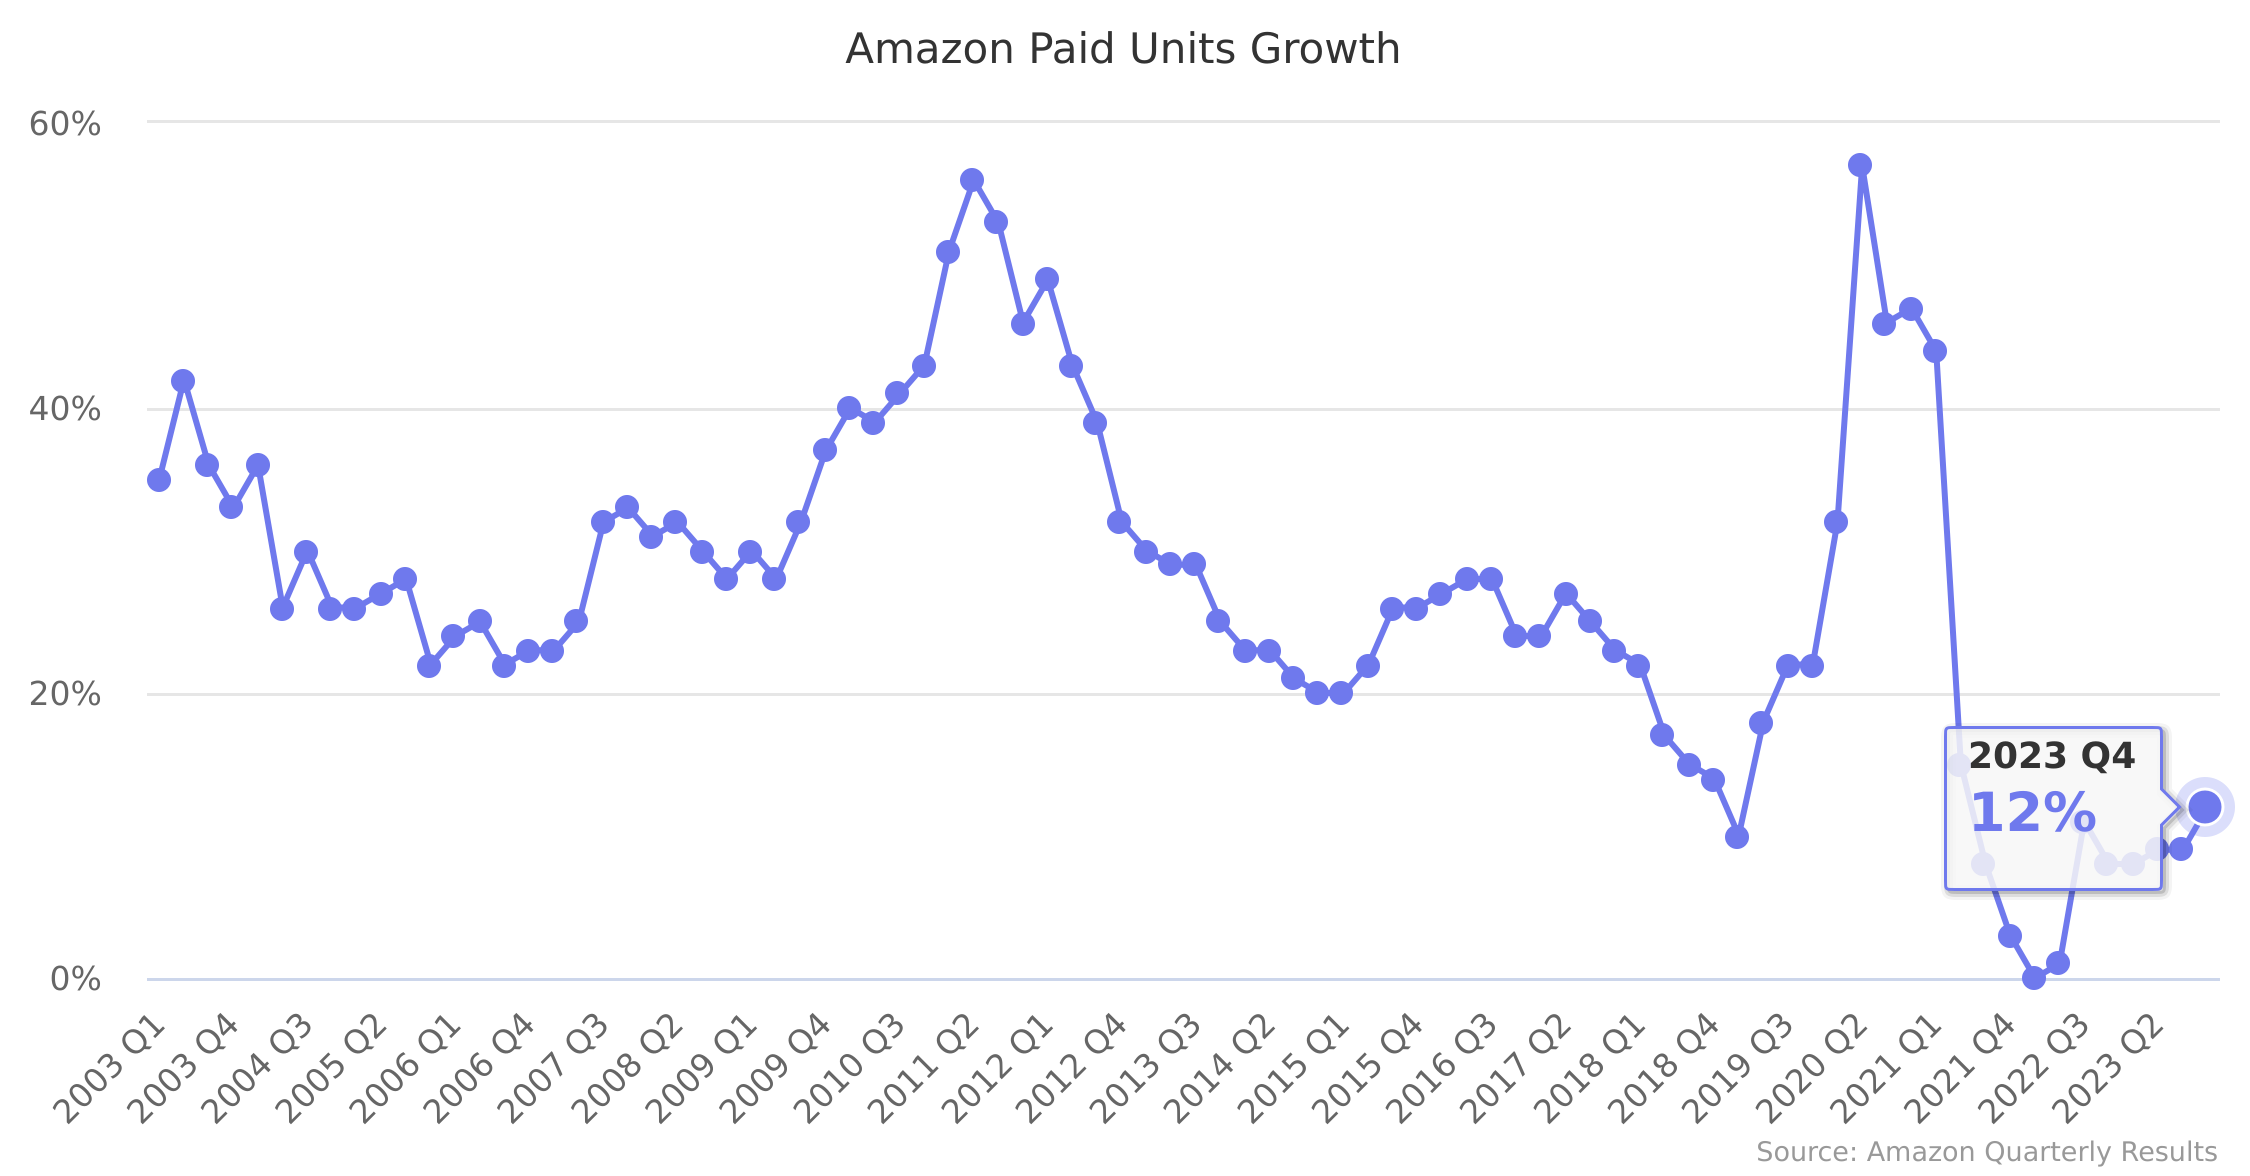 Amazon Paid Units Growth 2003-2022